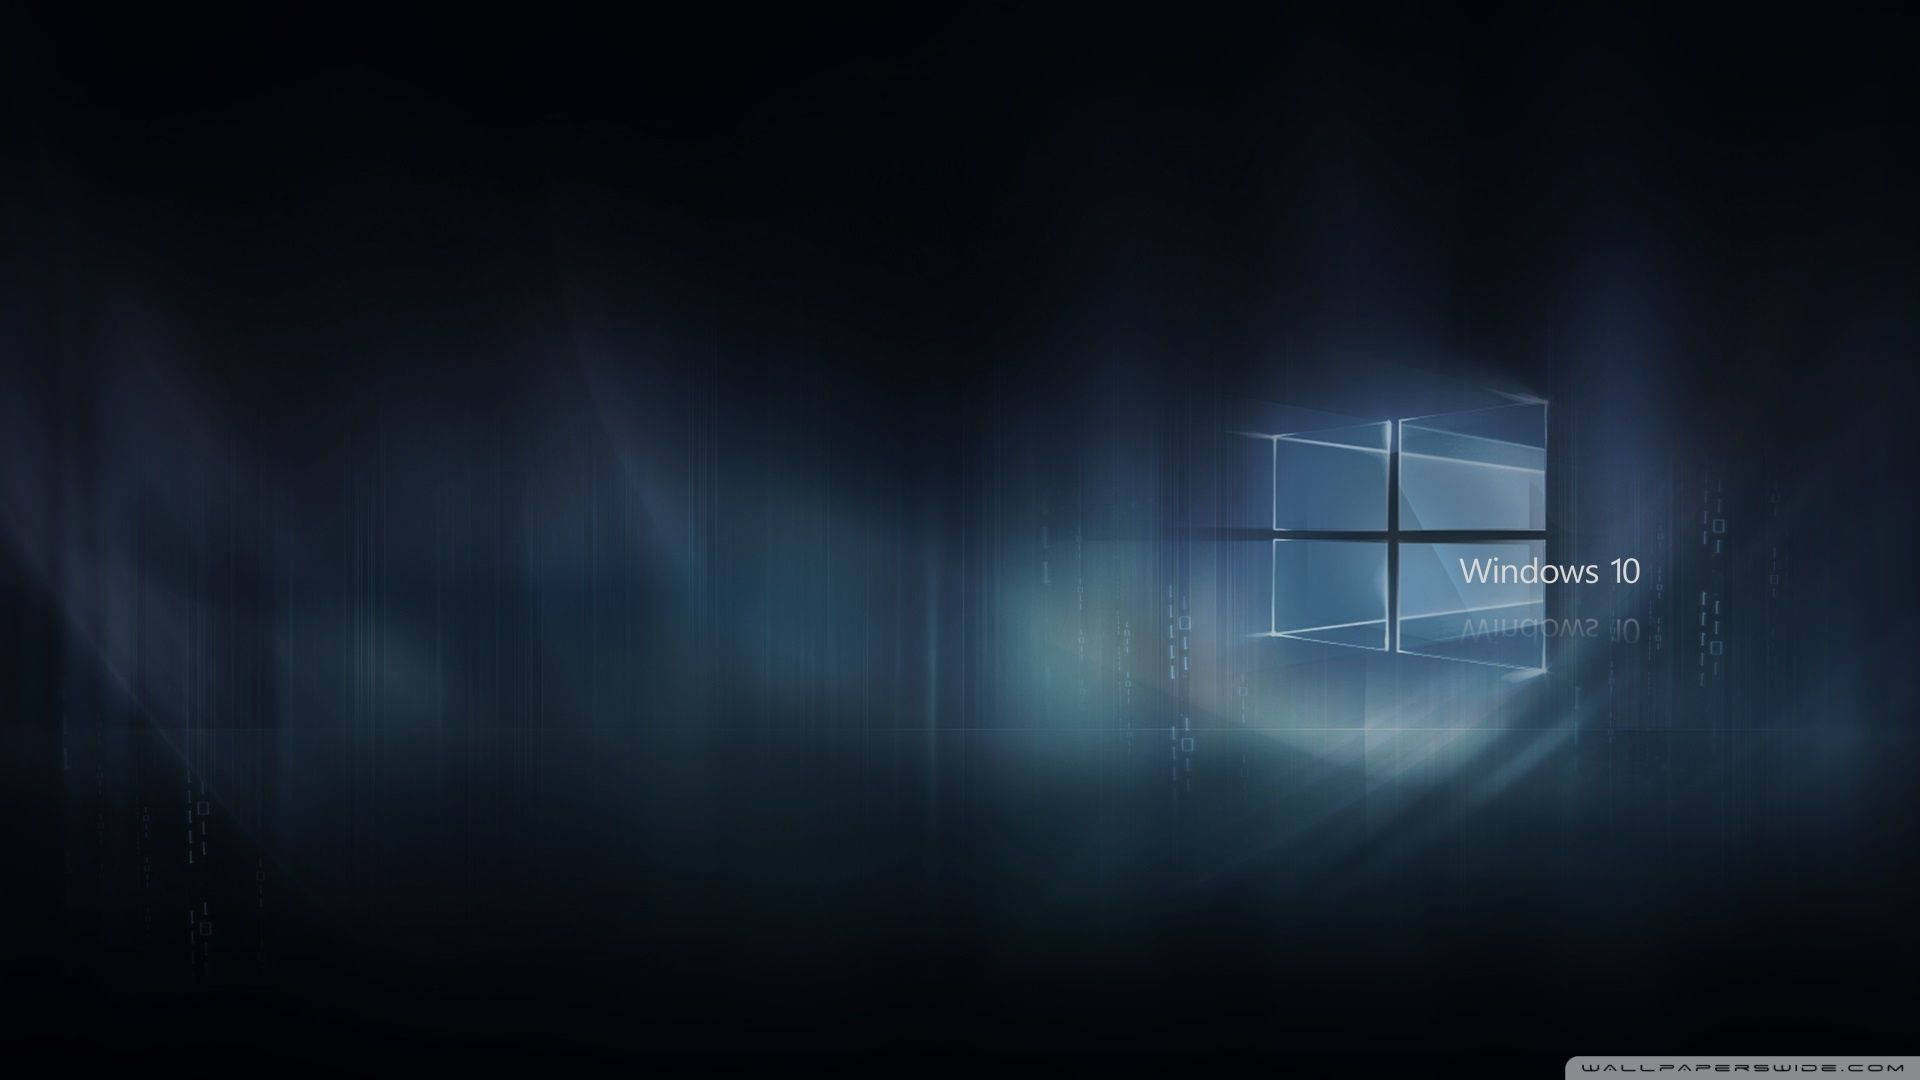 Smoky Windows 10 Hd Logo Background